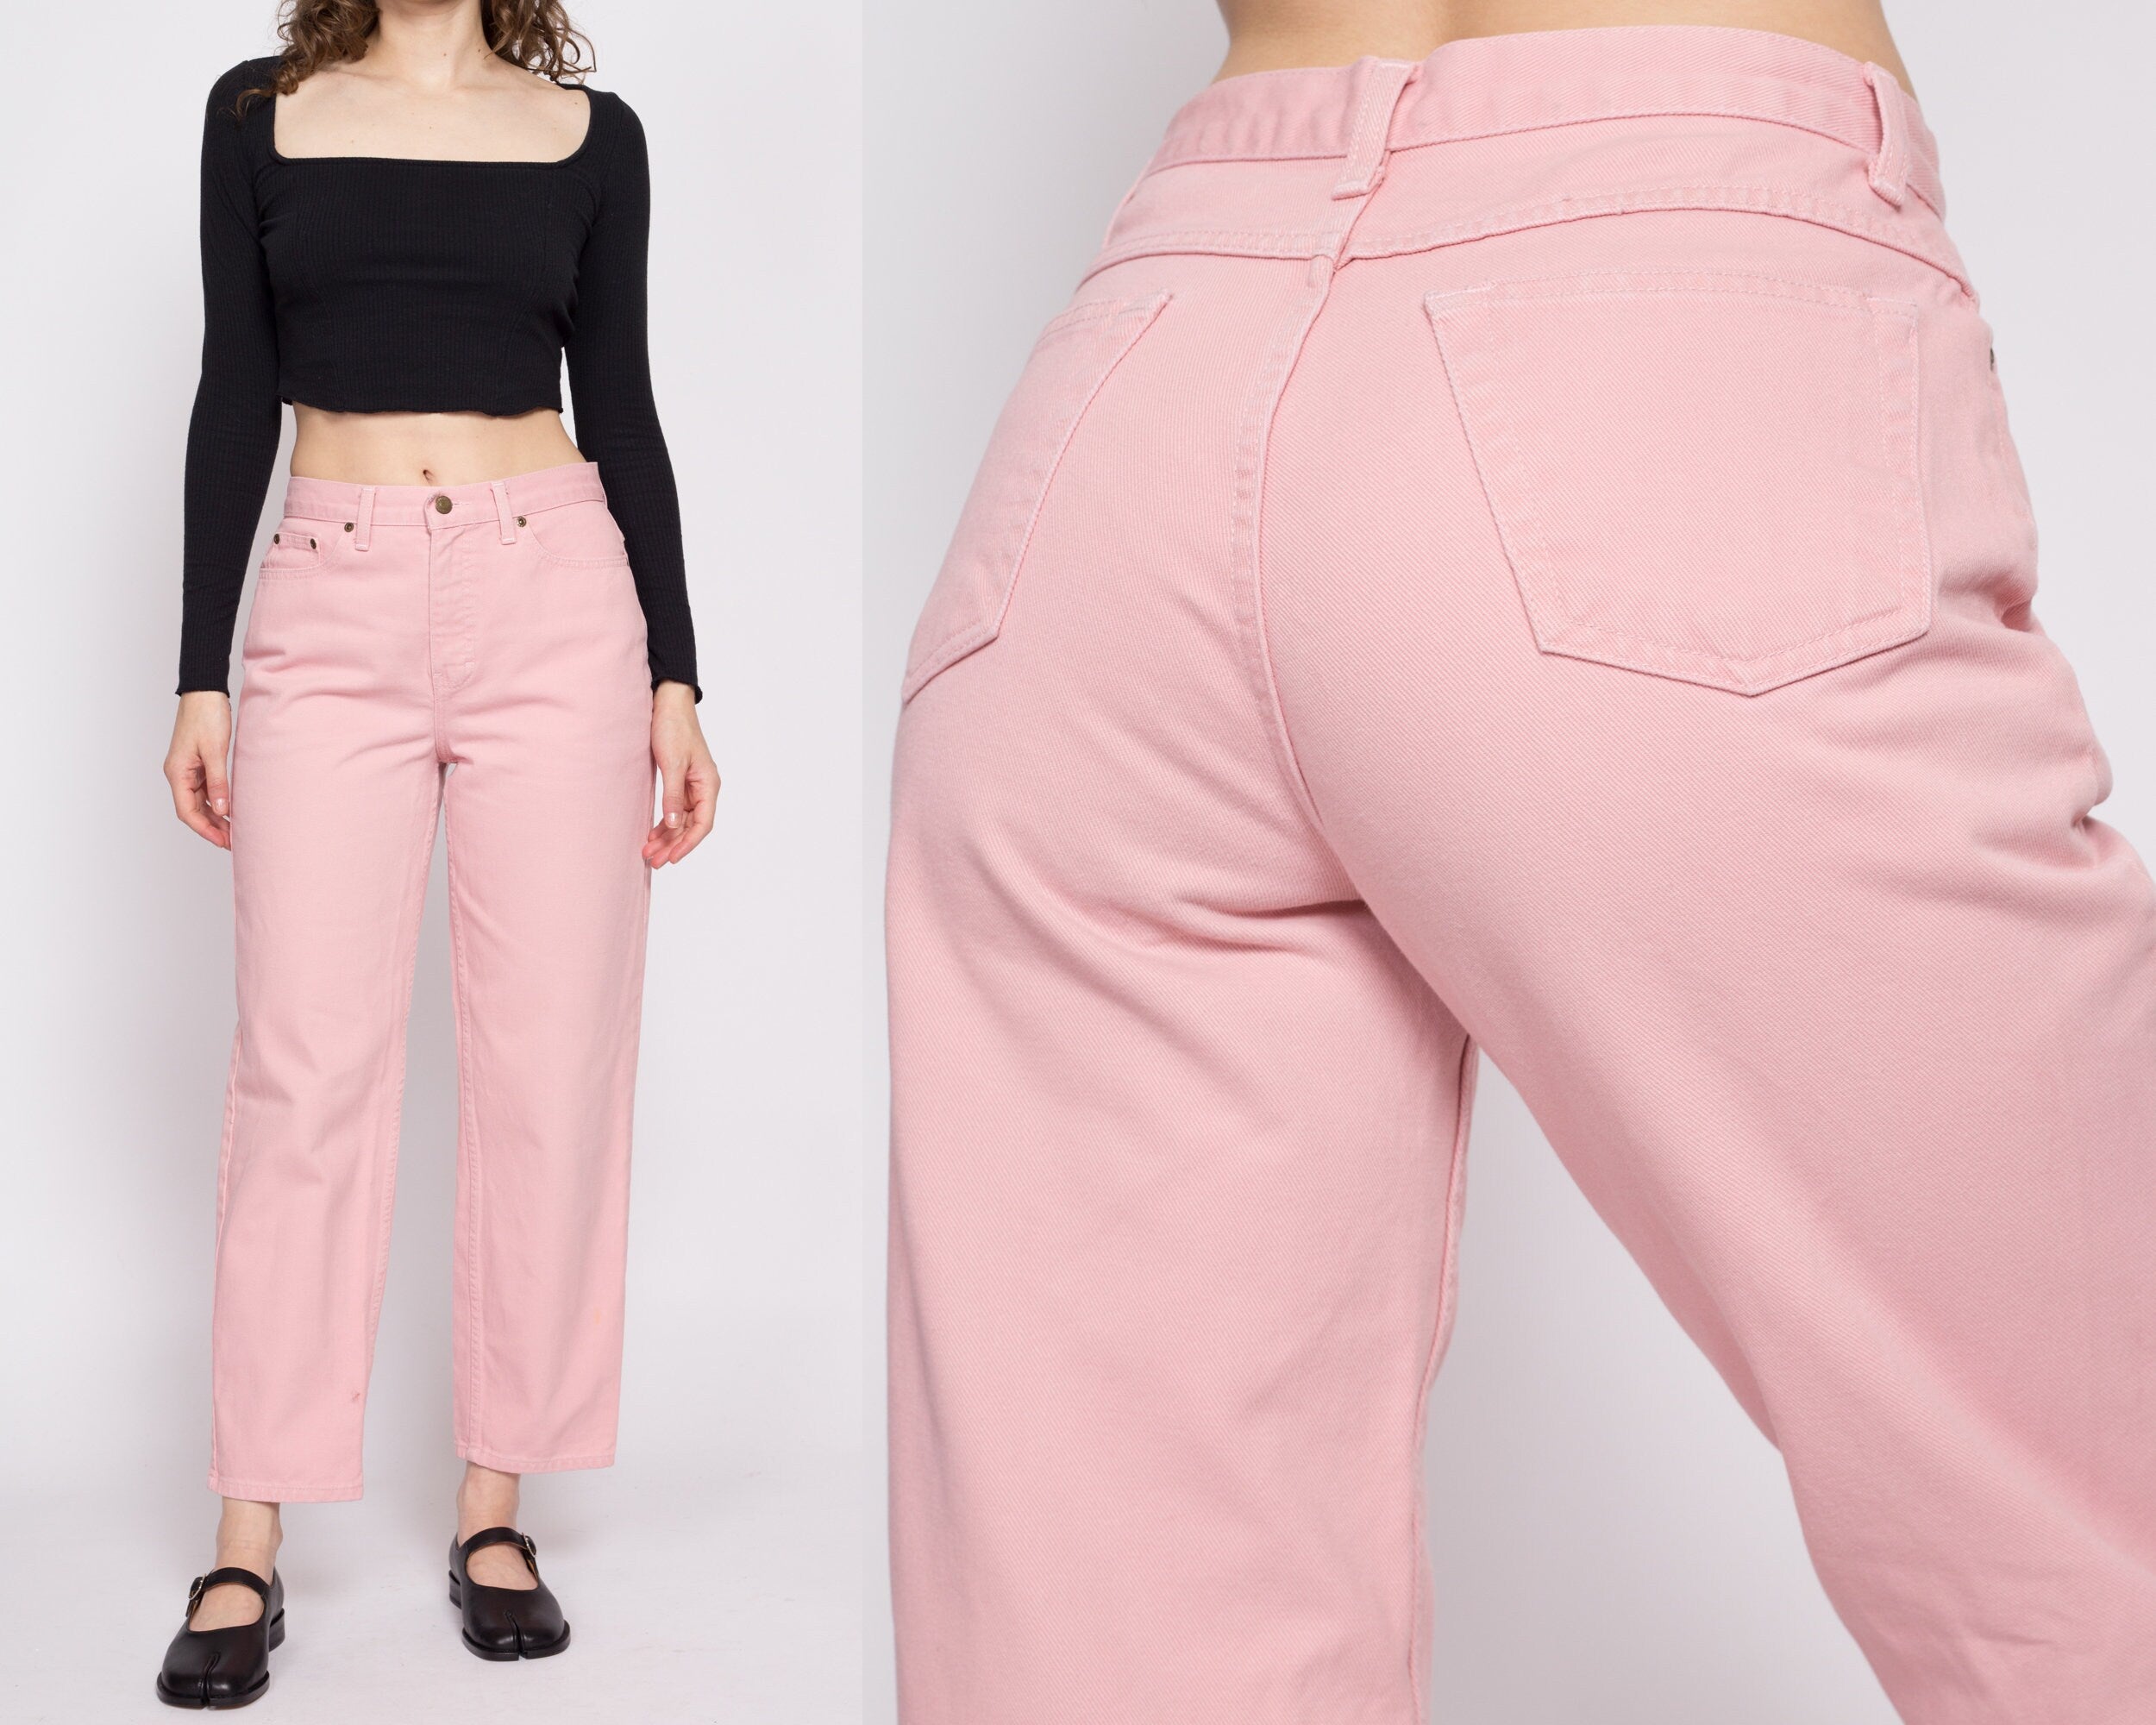 90s Blush Pink High Waisted Jeans - Petite Medium, 28.5